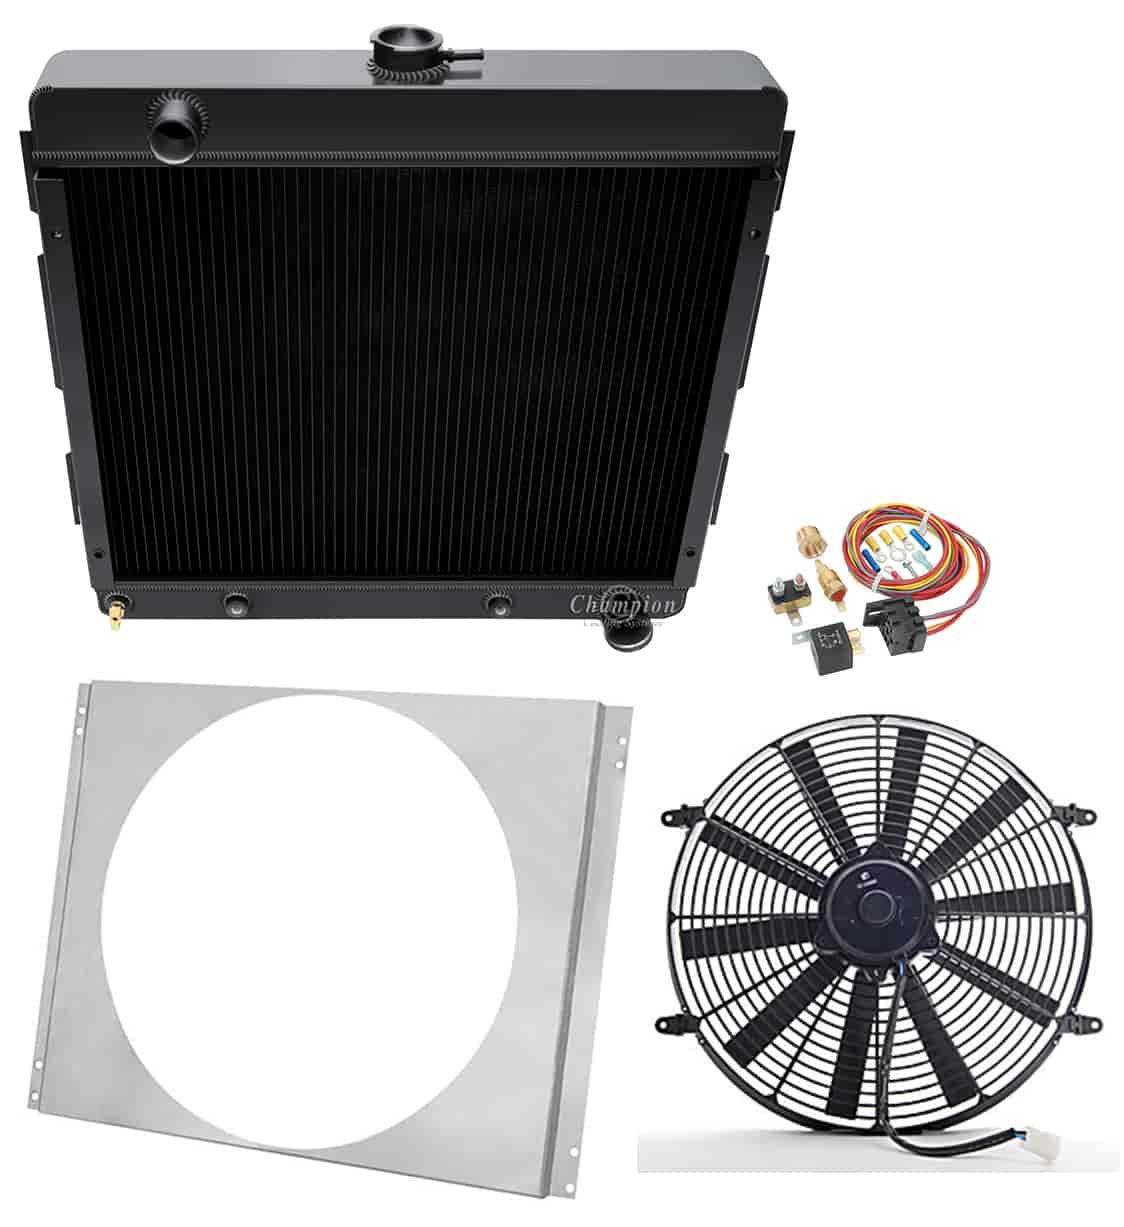 Champion Cooling Systems CC526B-BLKK 3-Row Aluminum Radiator Kit